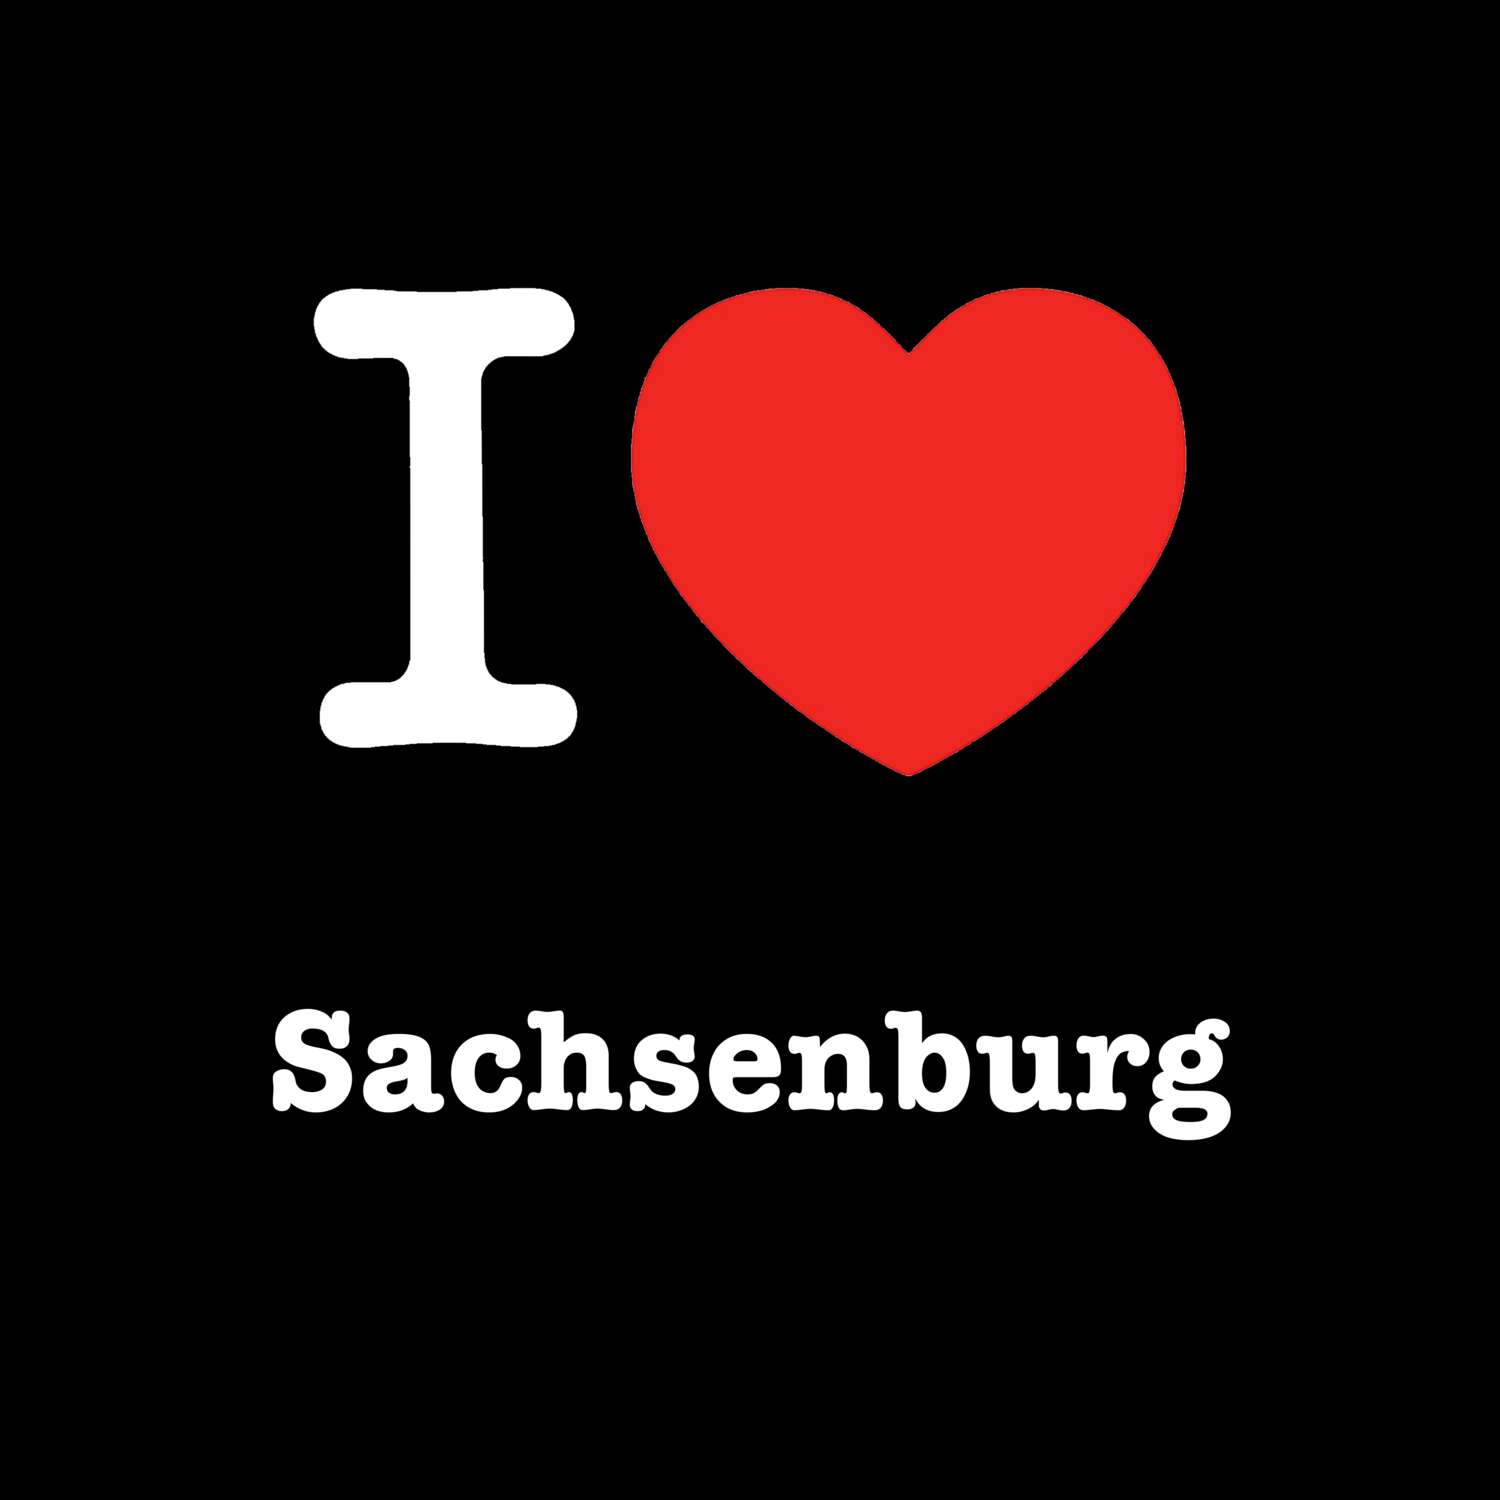 Sachsenburg T-Shirt »I love«